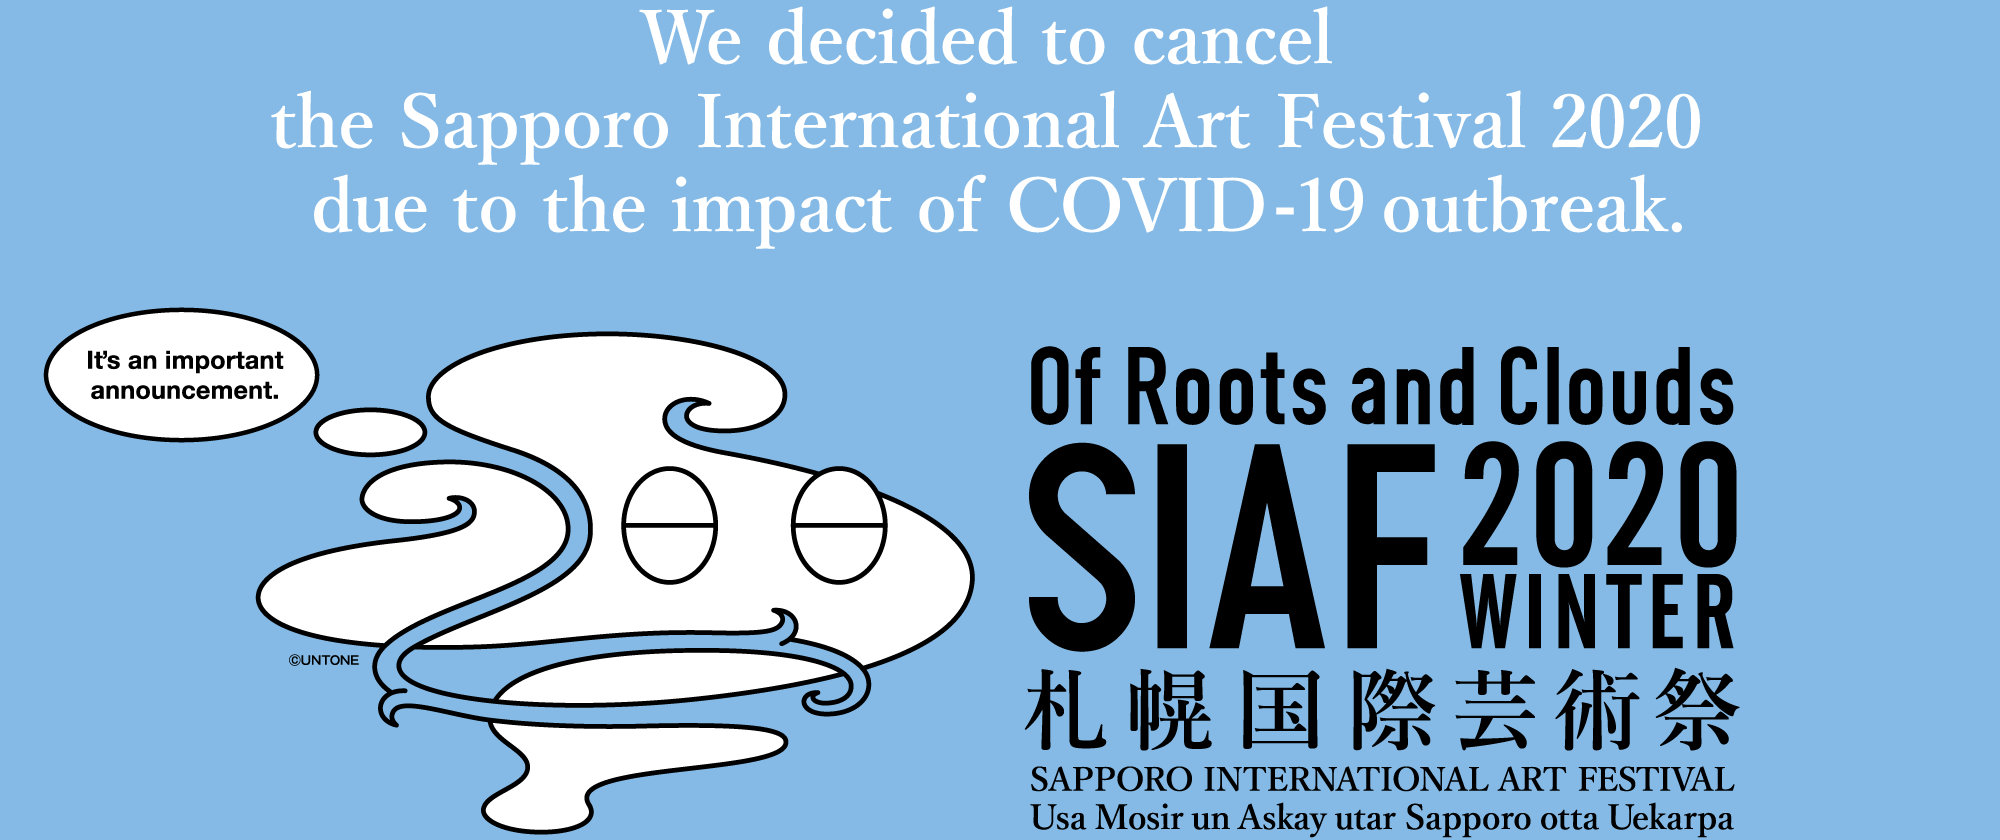 Sapporo International Art Festival Cancelled